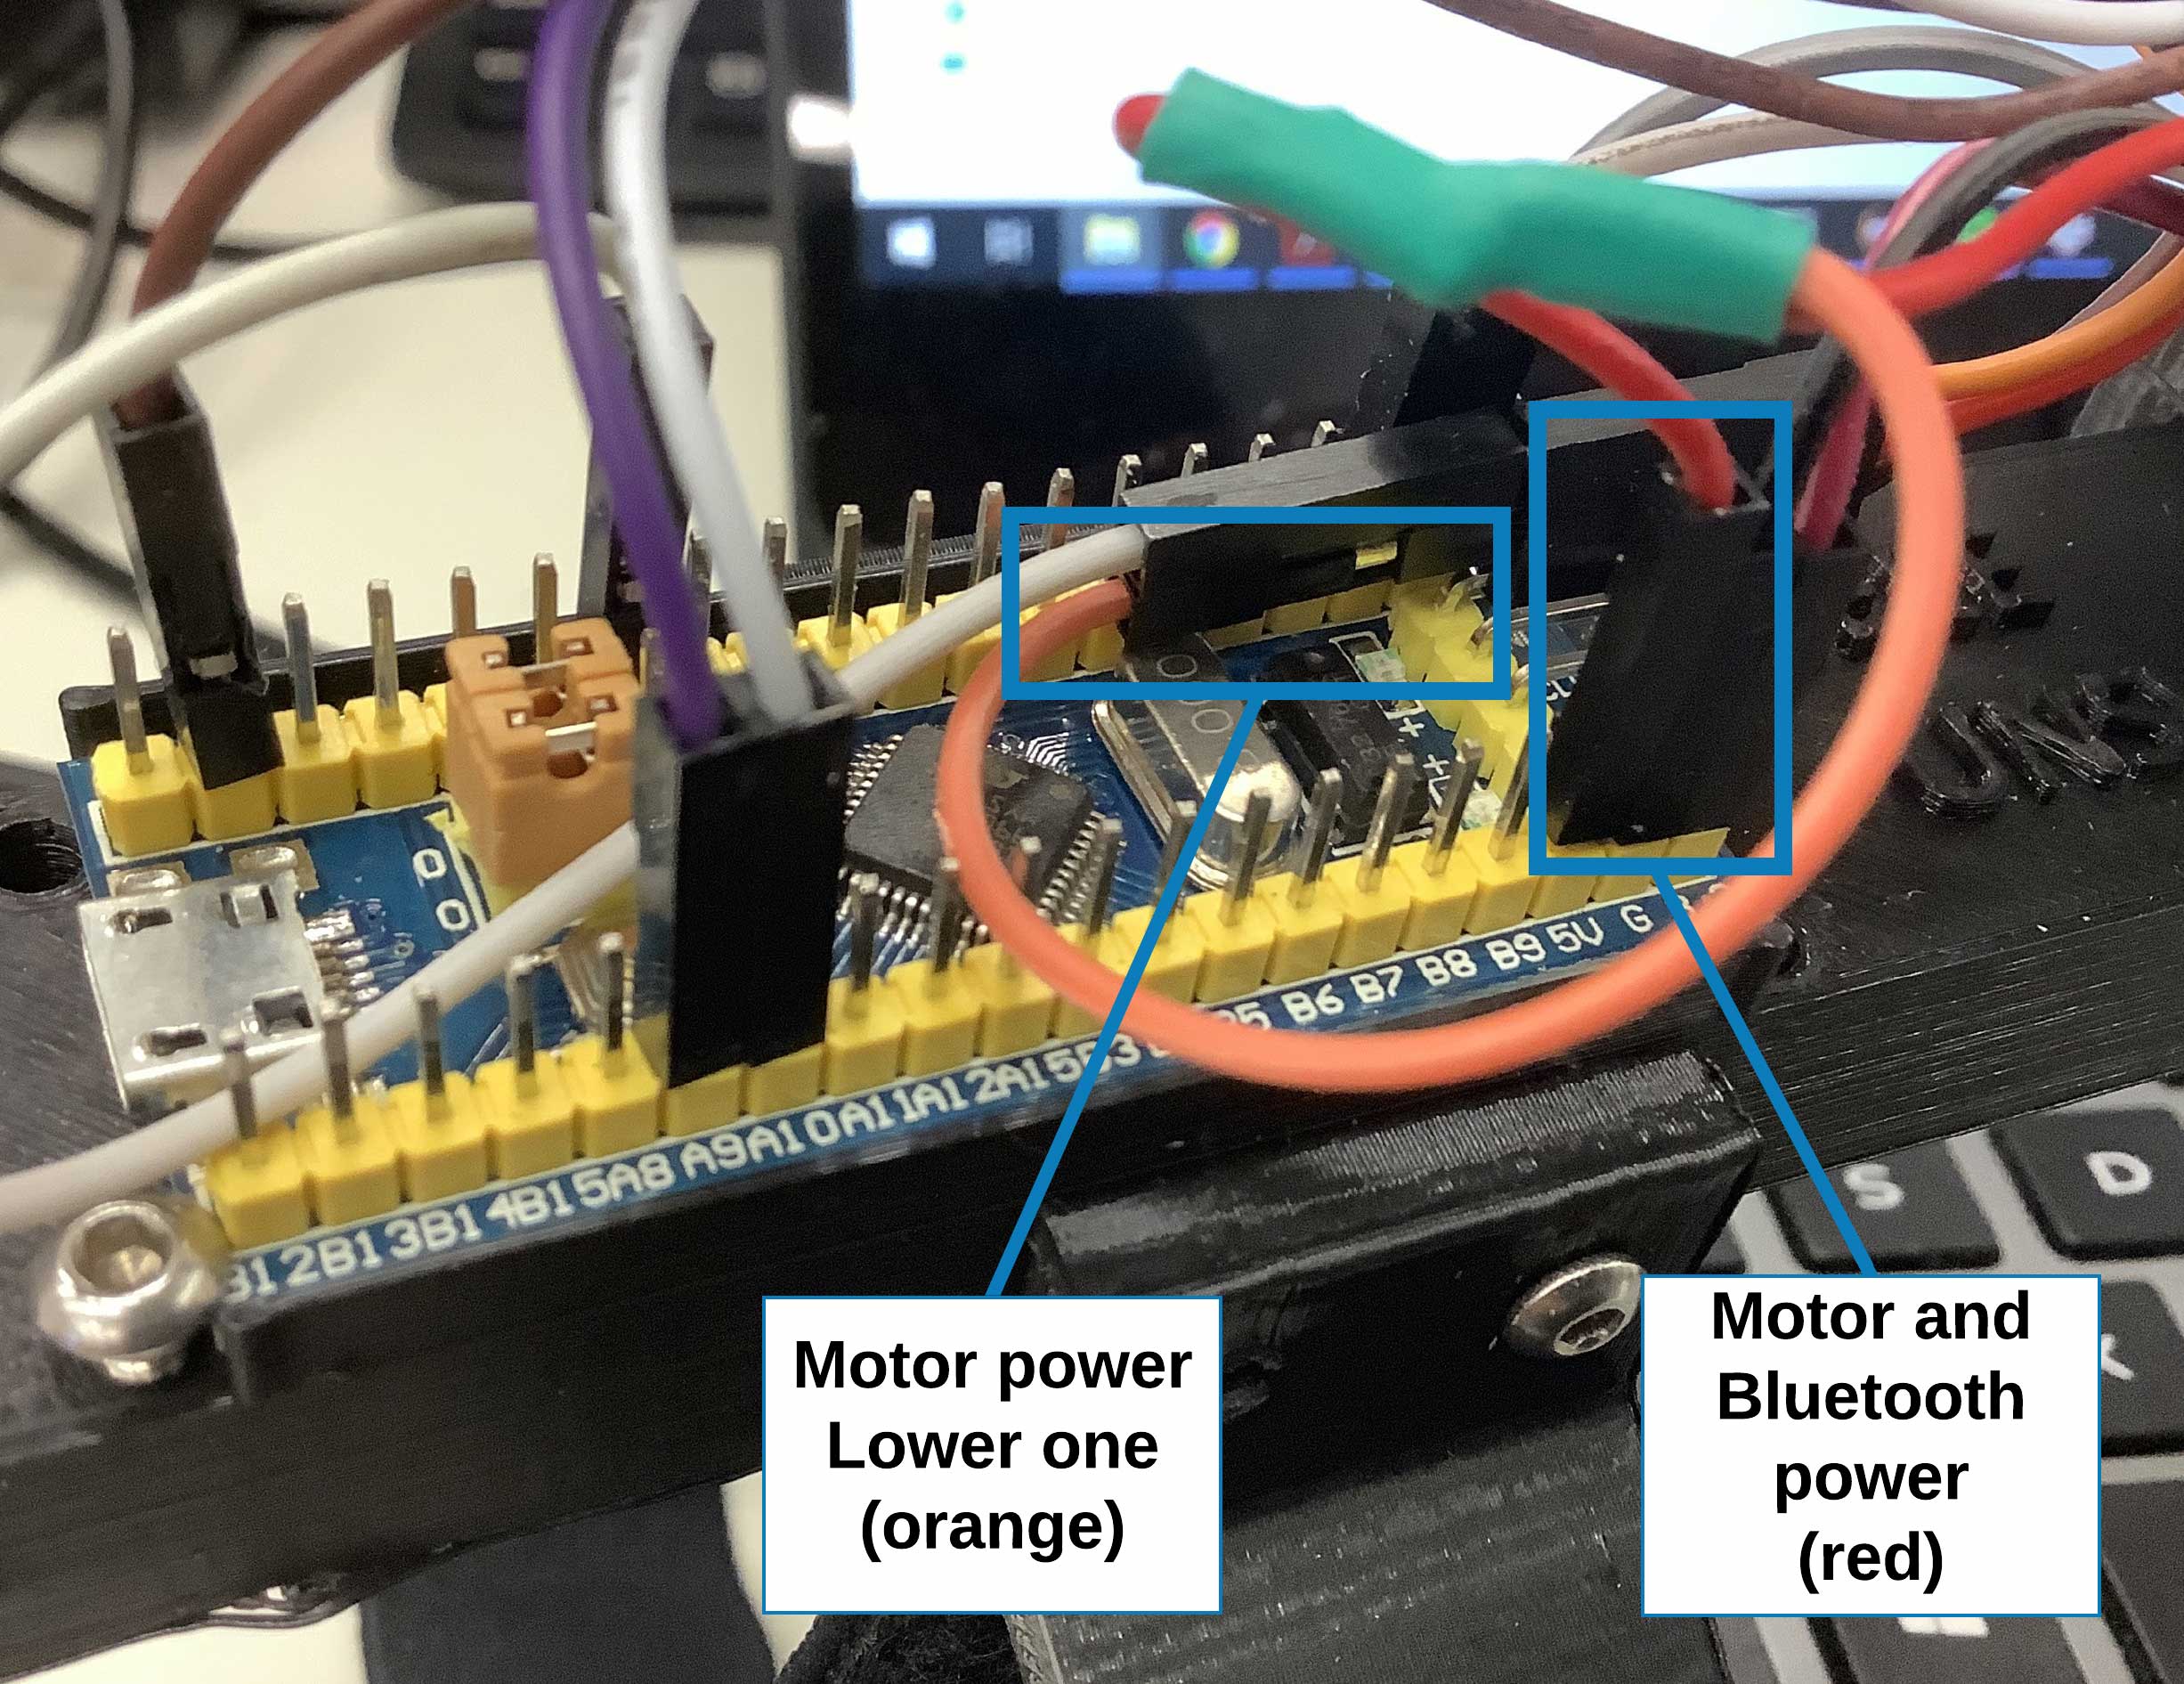 WARNING: Unplug motor power when programming STM32